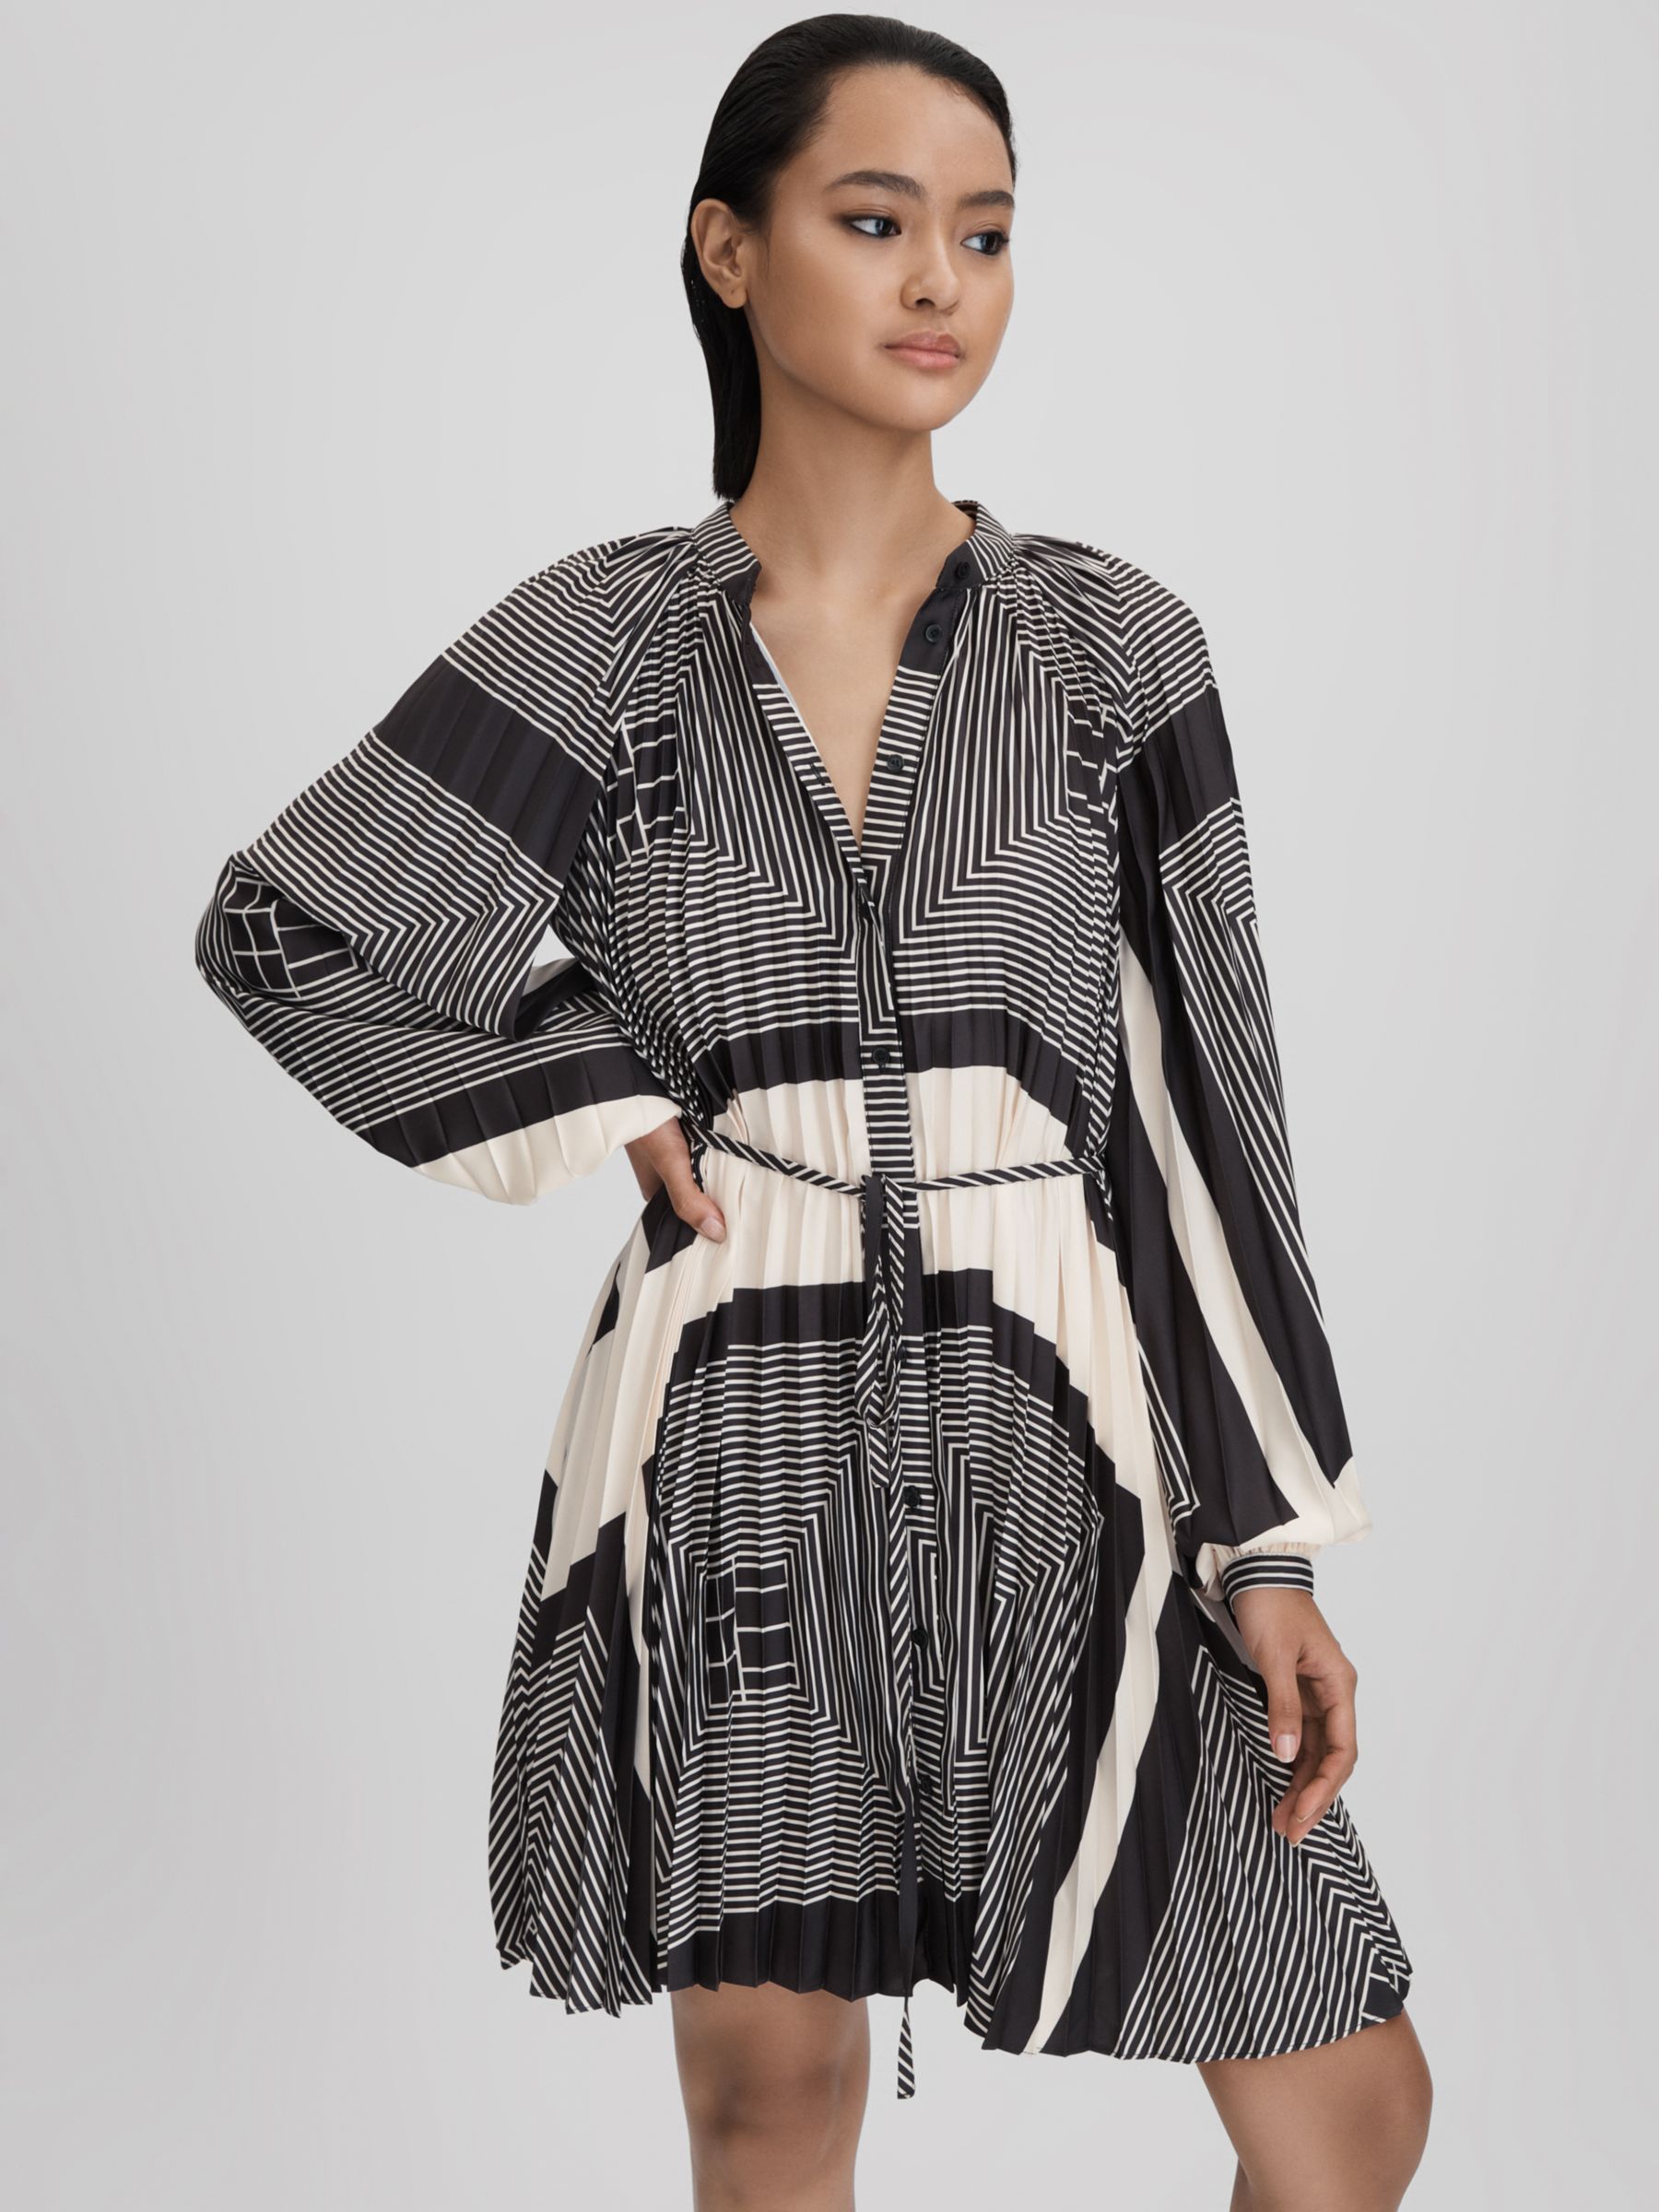 Reiss Bay Stripe Shirt Dress, Black/White at John Lewis & Partners